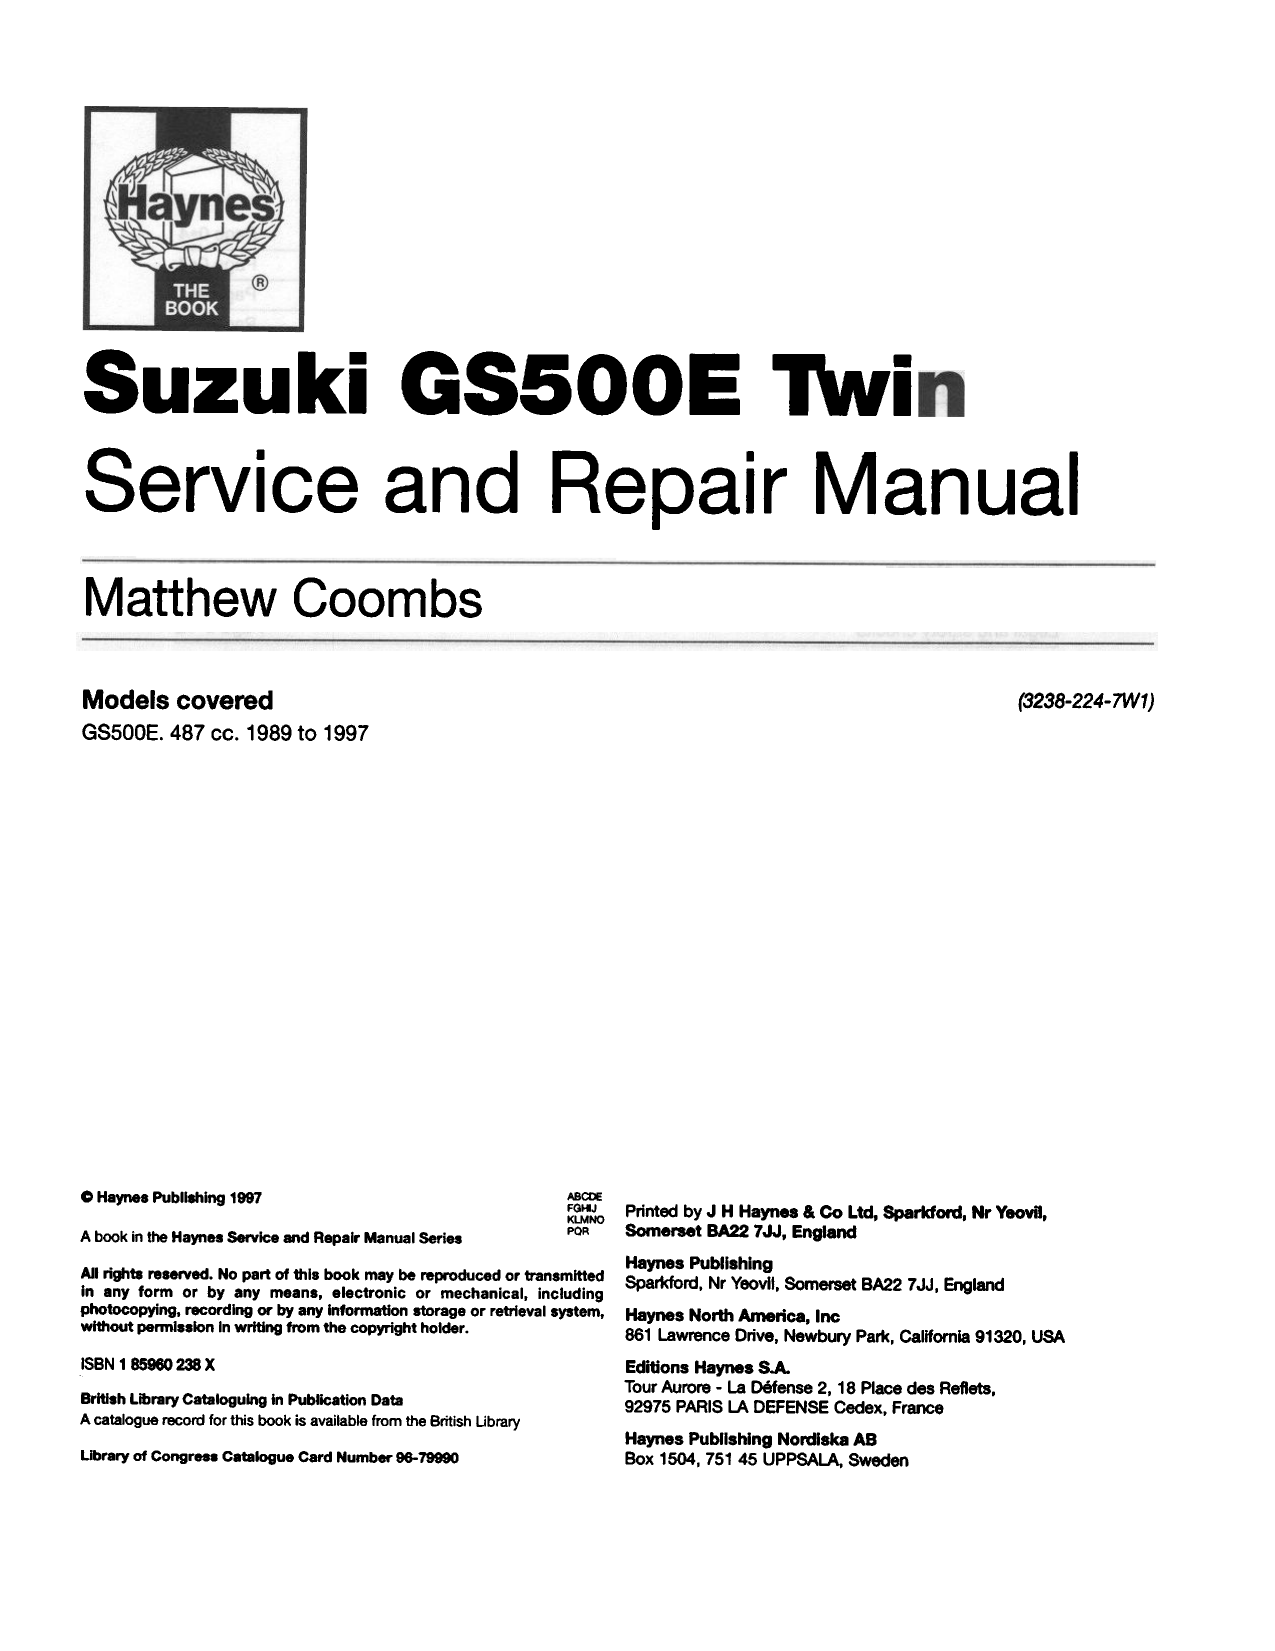 1989-1997 Suzuki GS500E, GS500 repair manual Preview image 2